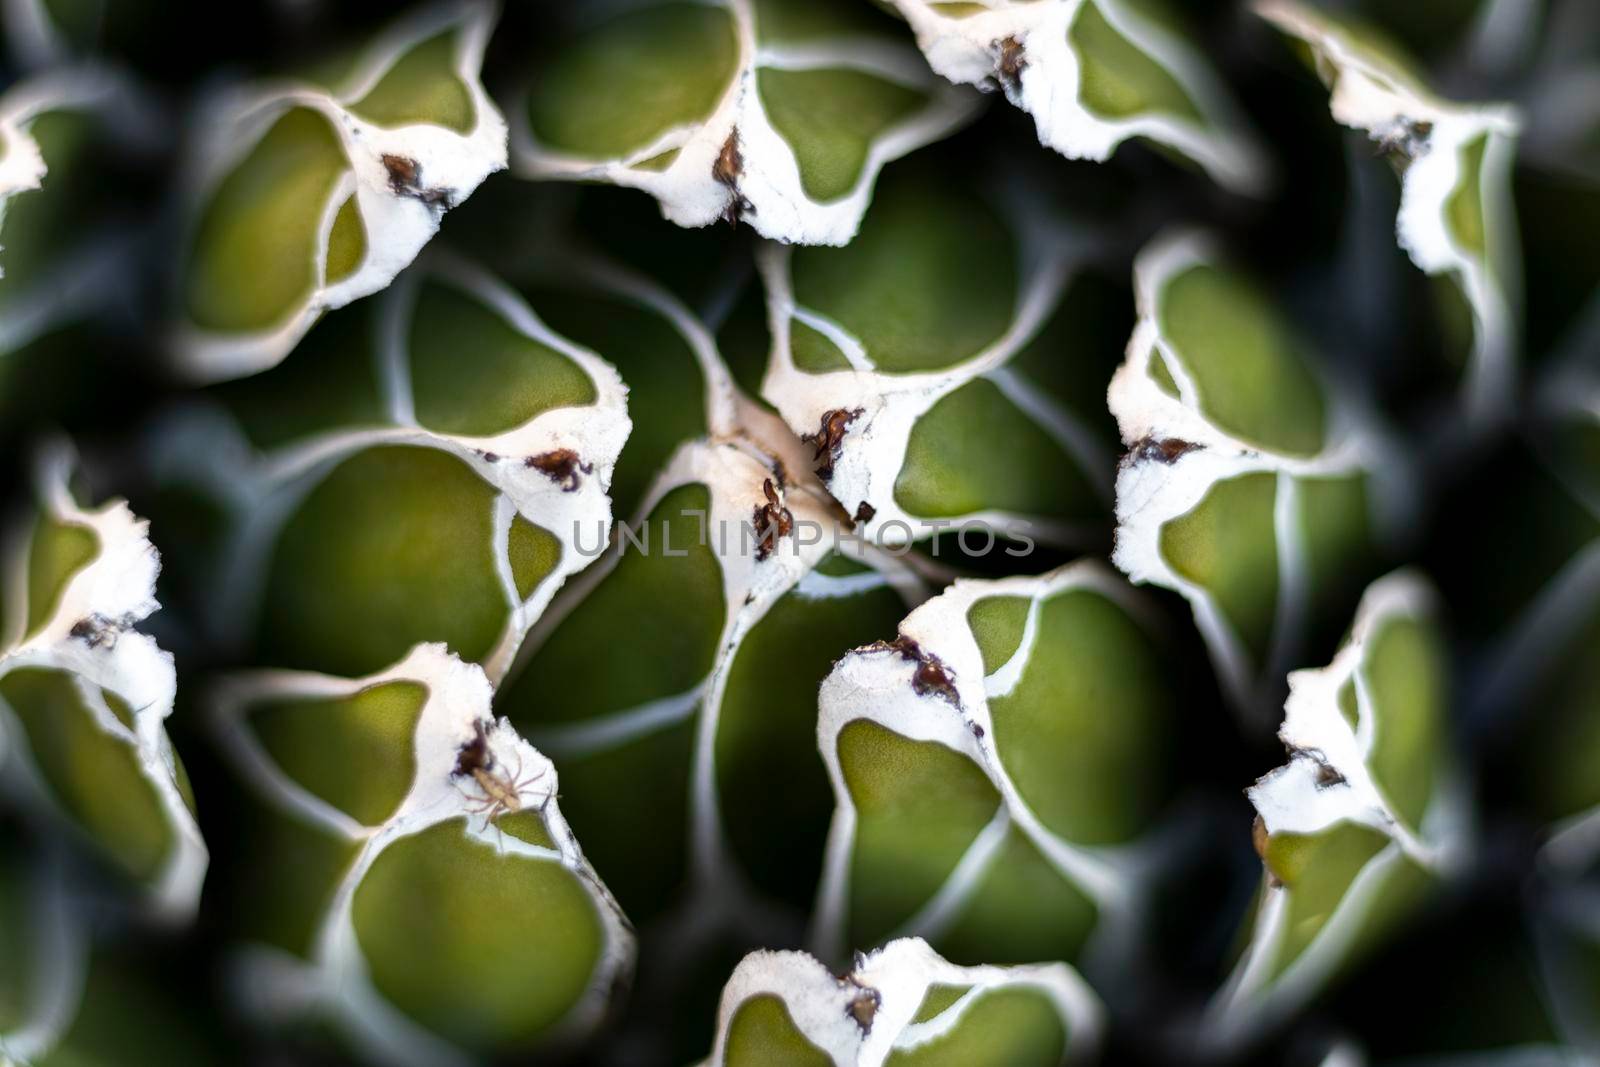 Closeup of a Royal agave plant